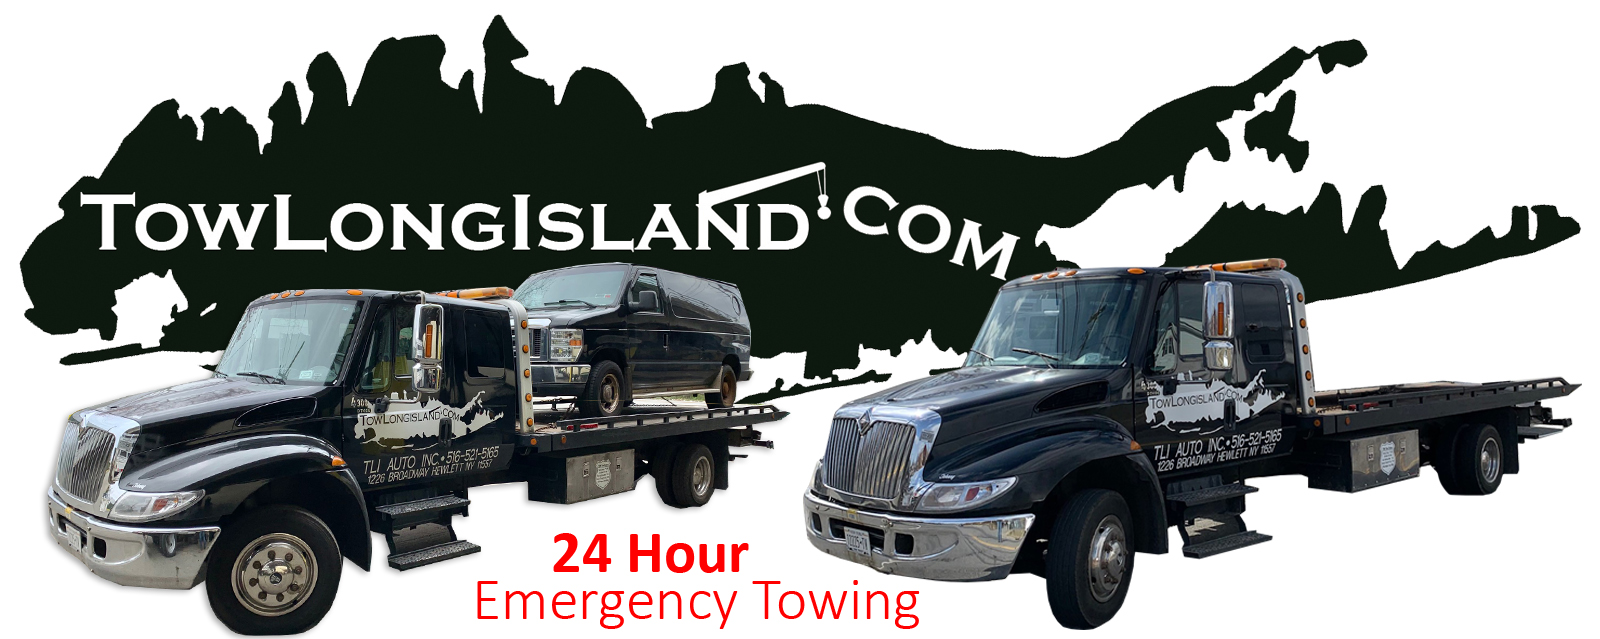 24 Hour Towing Service | West Hempstead, Long Island, Nassau County, New York | TowLongIsland.com 516.521.5165